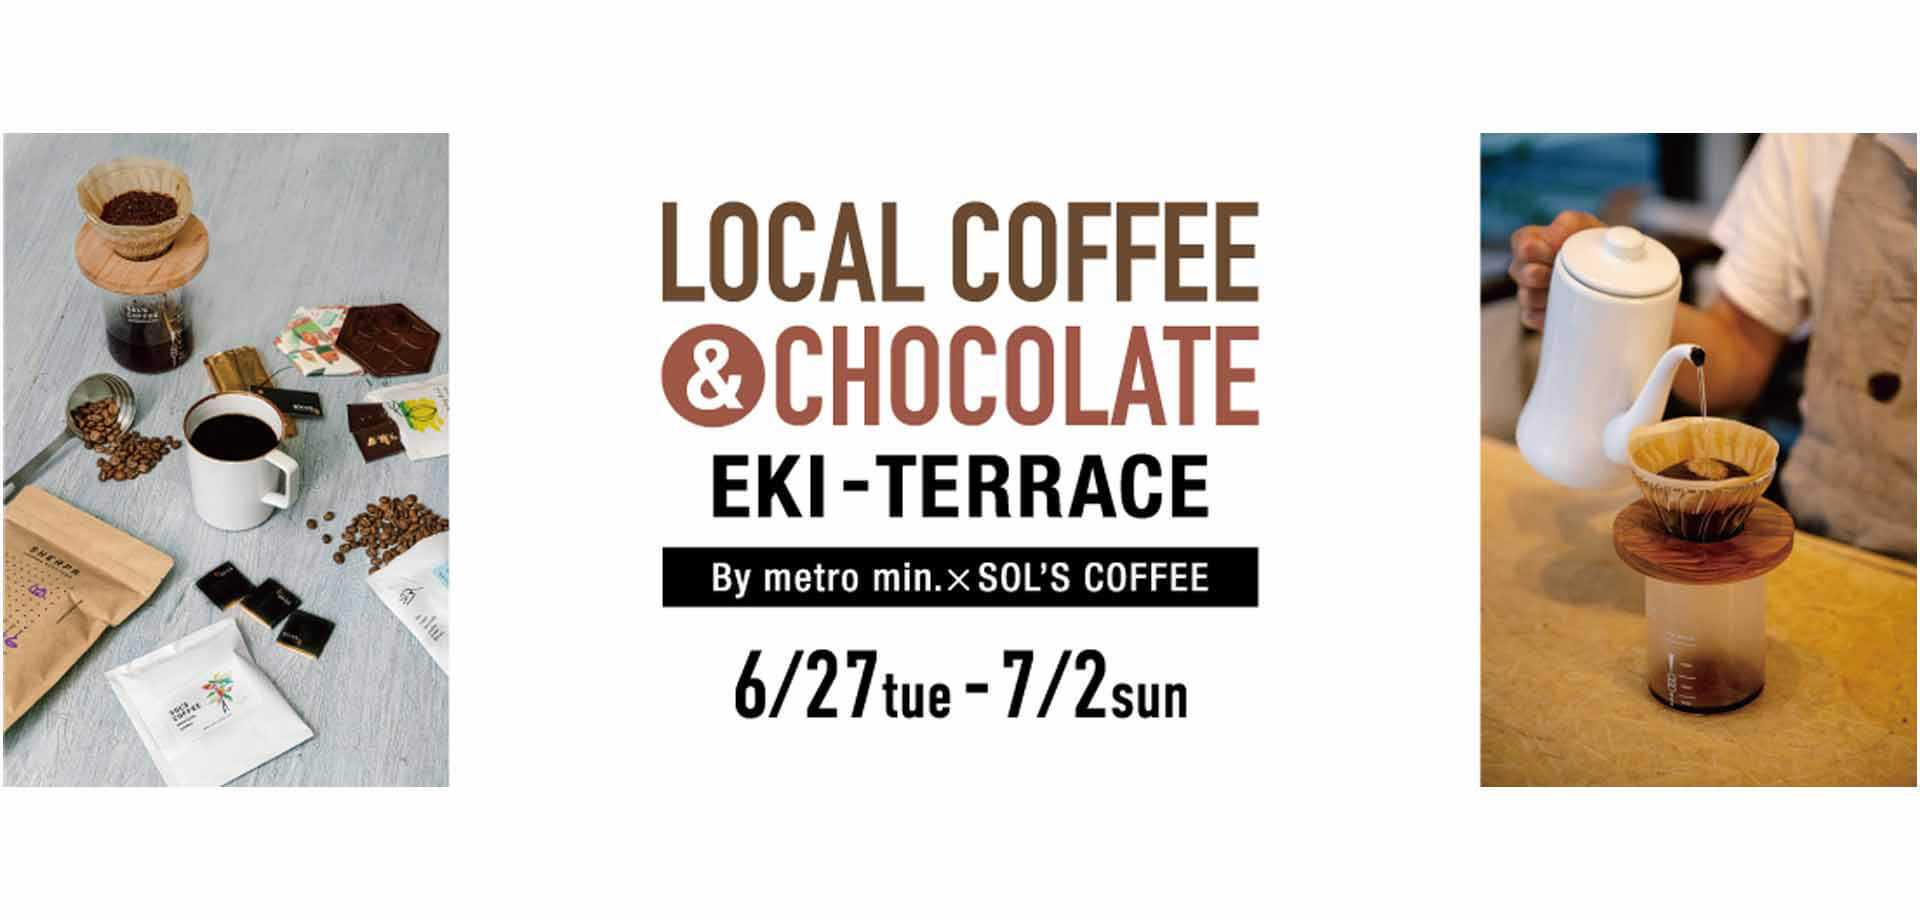 JR東日本クロスステーション 「エキュートエディション飯田橋」 「LOCAL COFFEE & CHOCOLATE EKI-TERRACE」